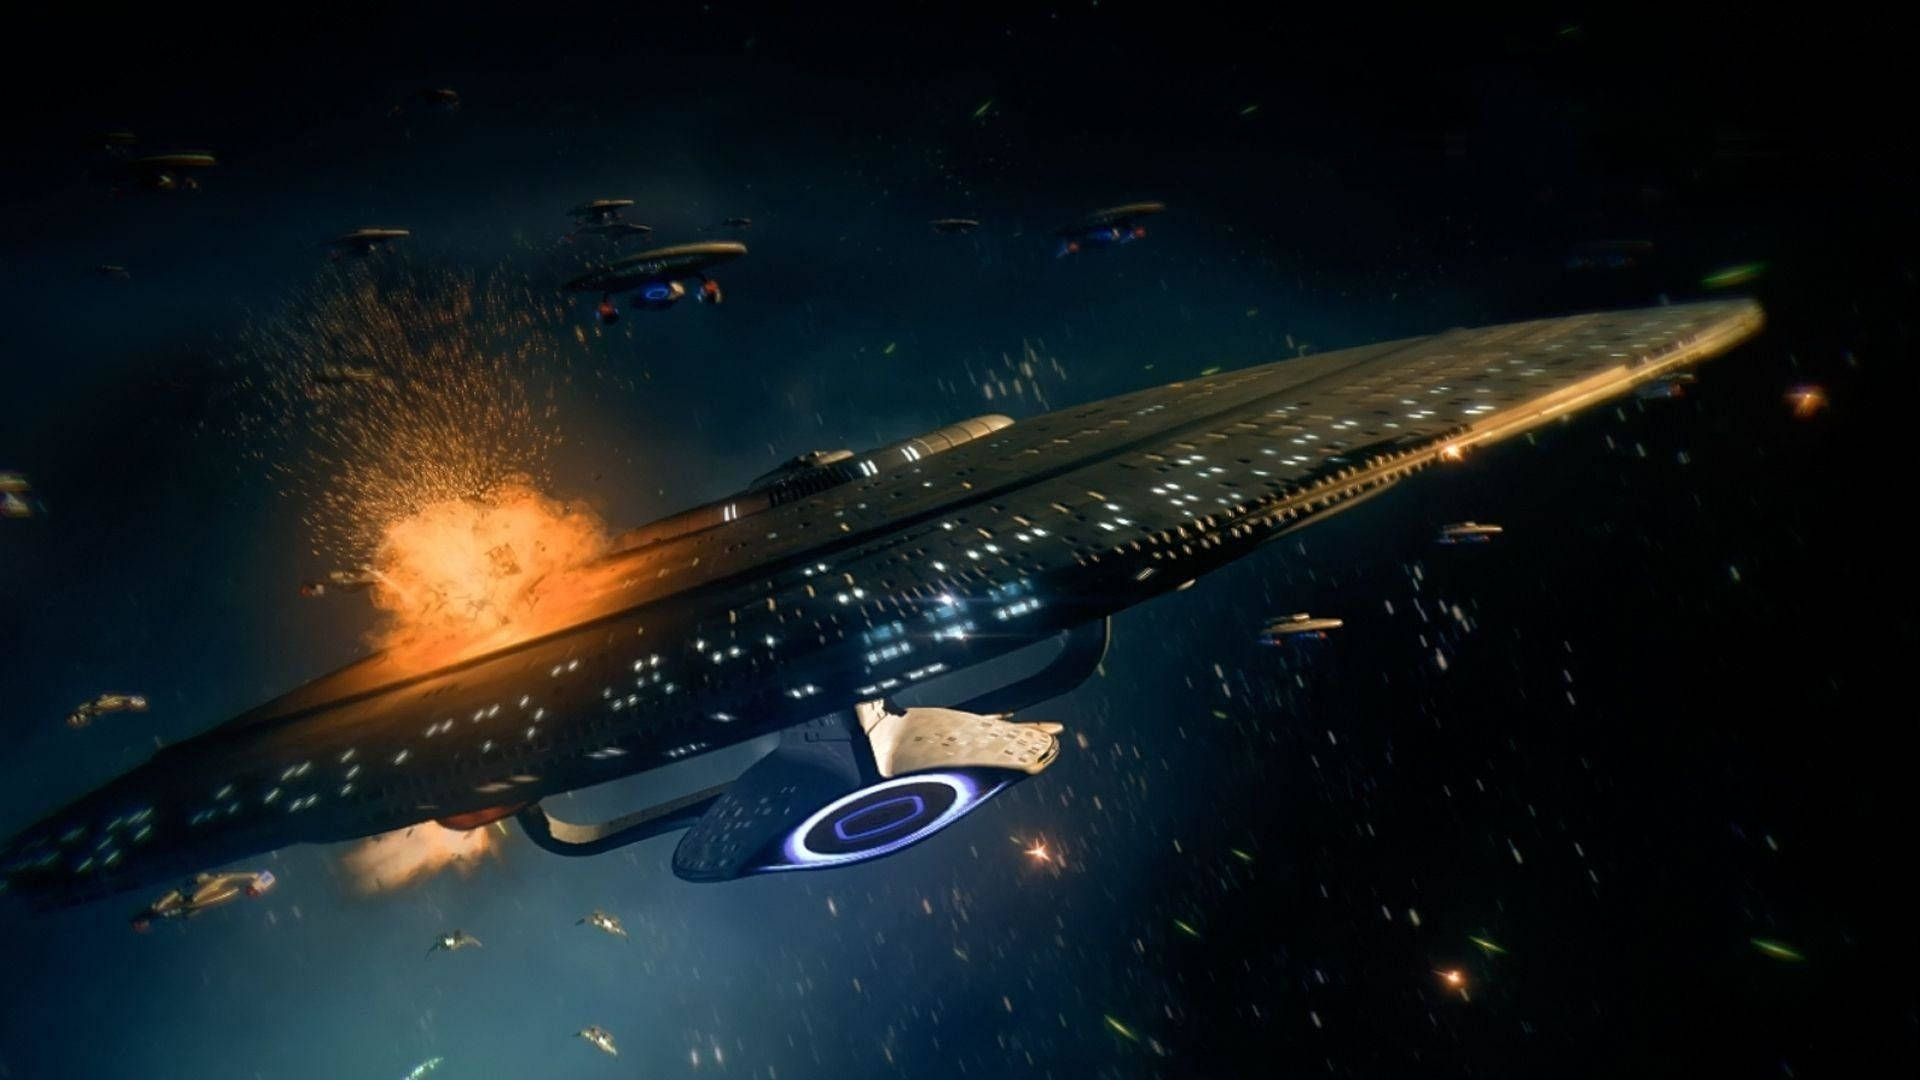 Battle of Star Trek ships in outer space wallpaper. 